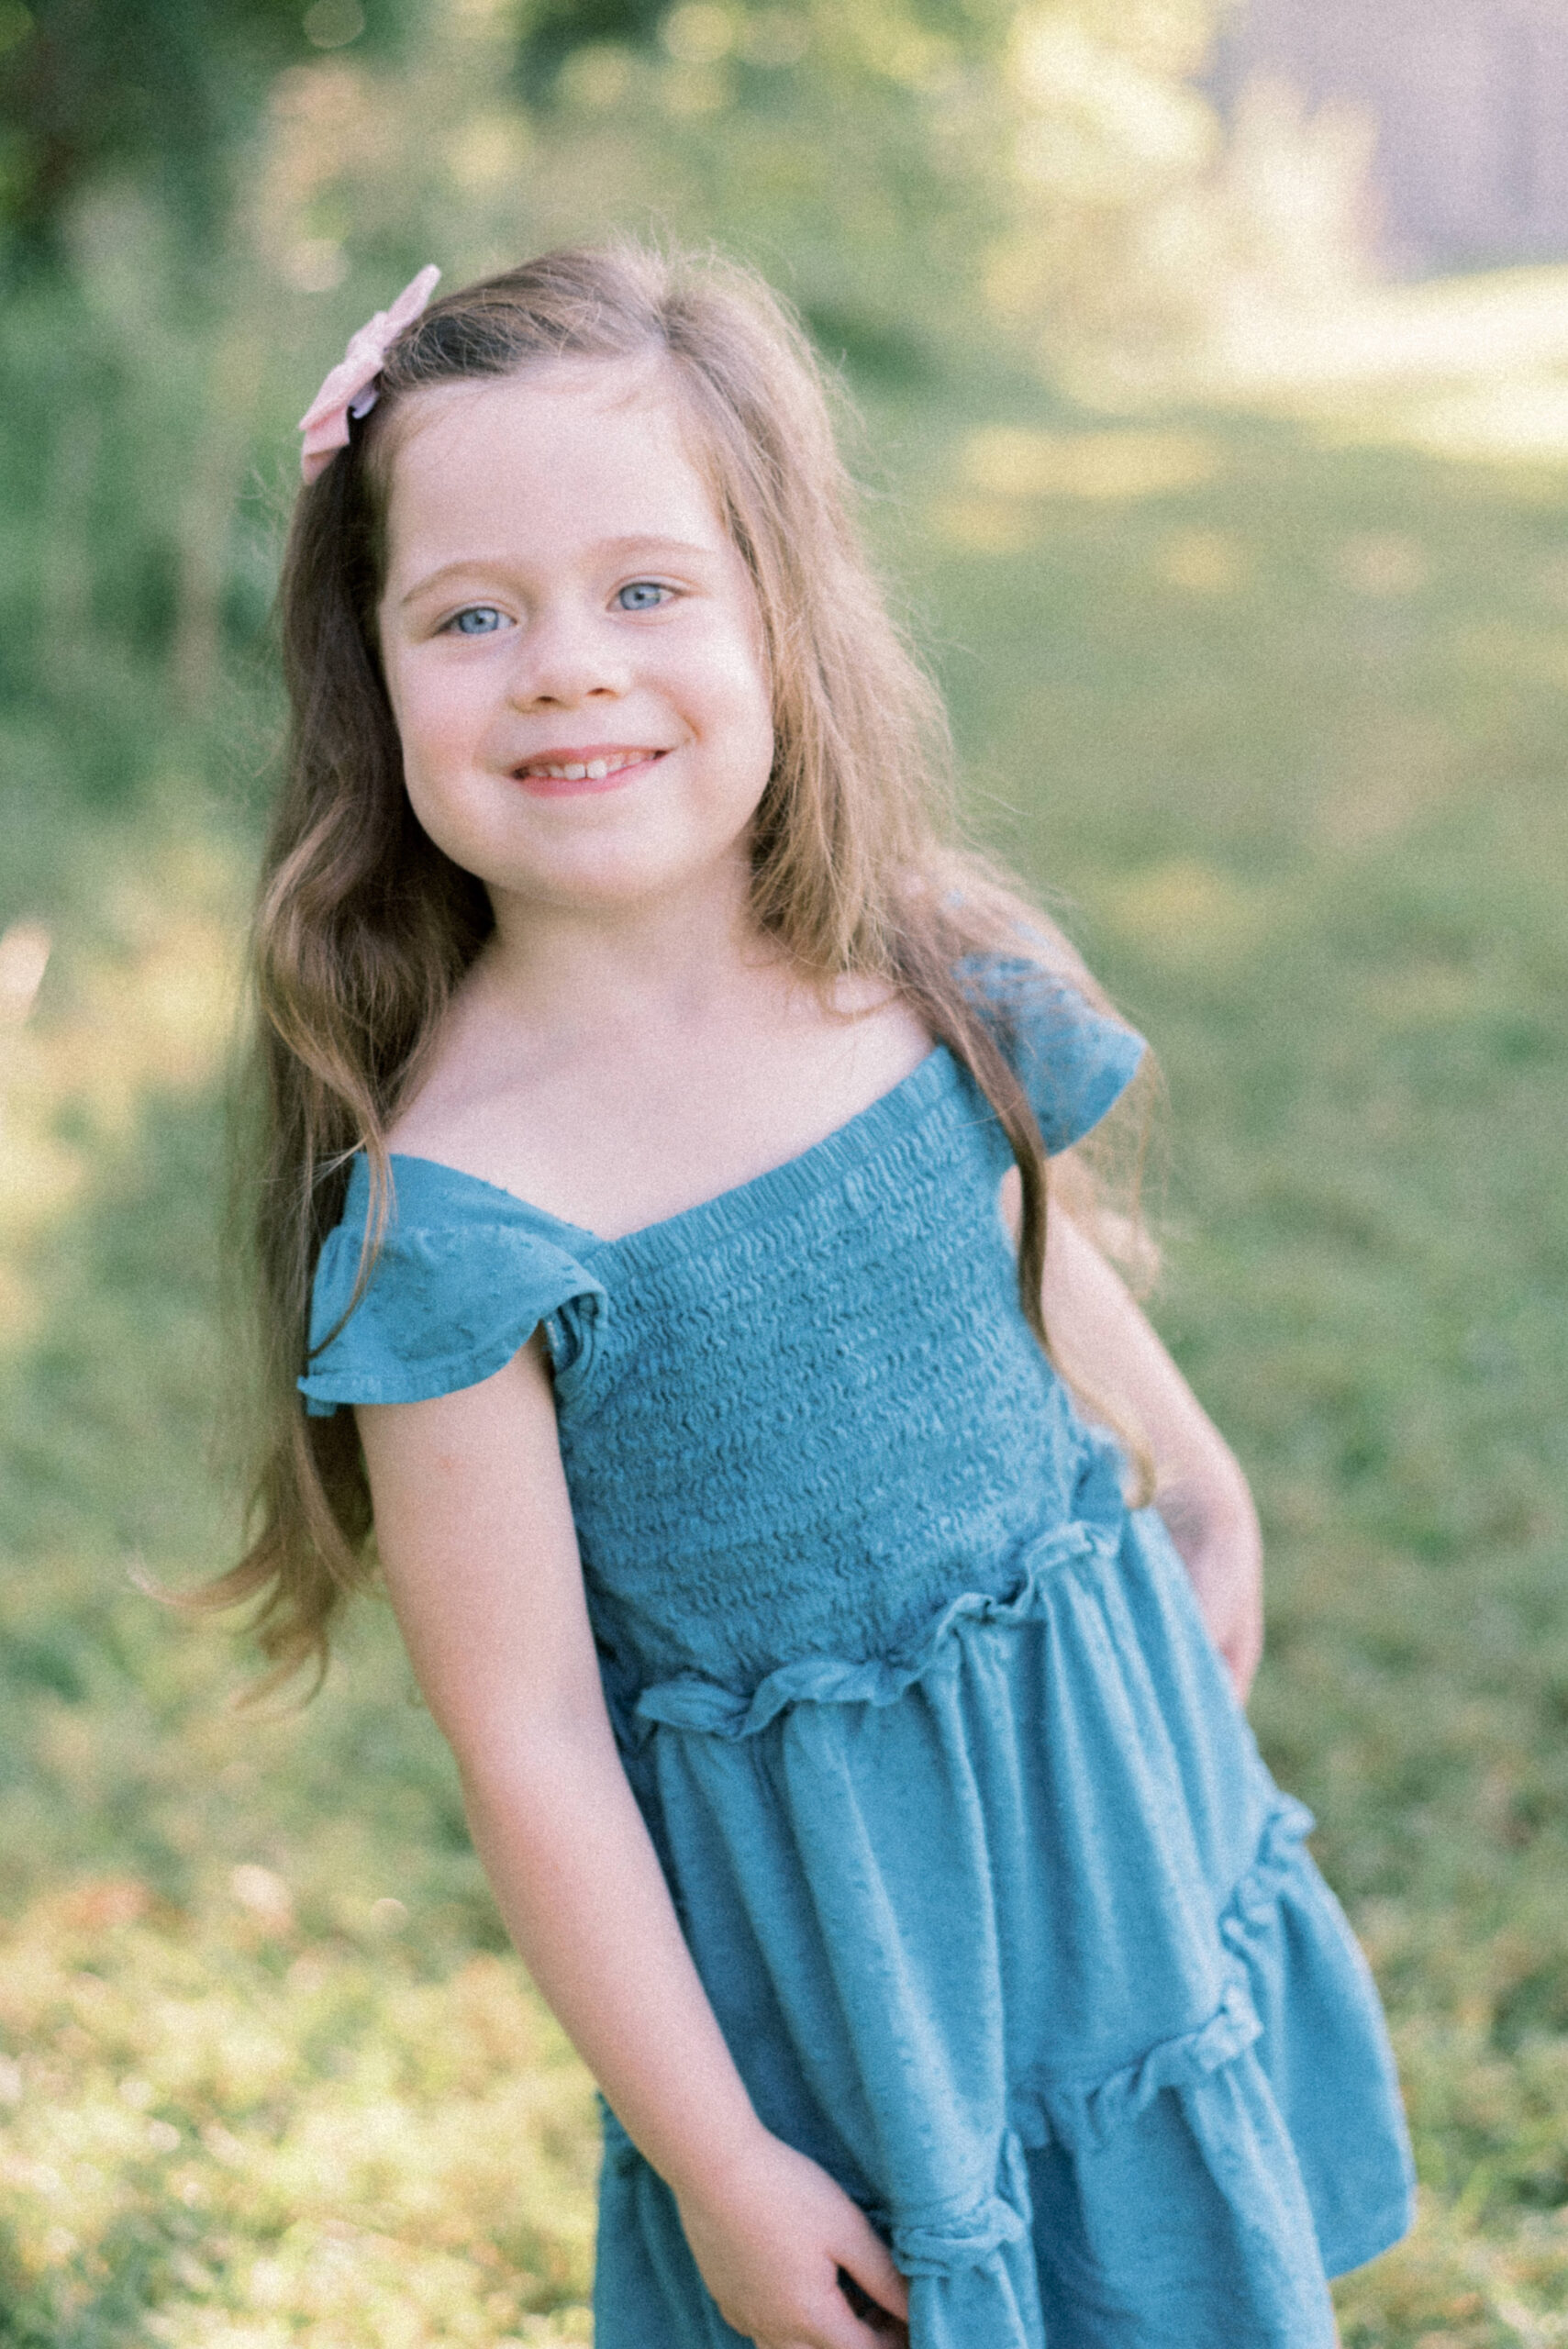 Maryland photographer captures girl smiling at camera wearing blue dress